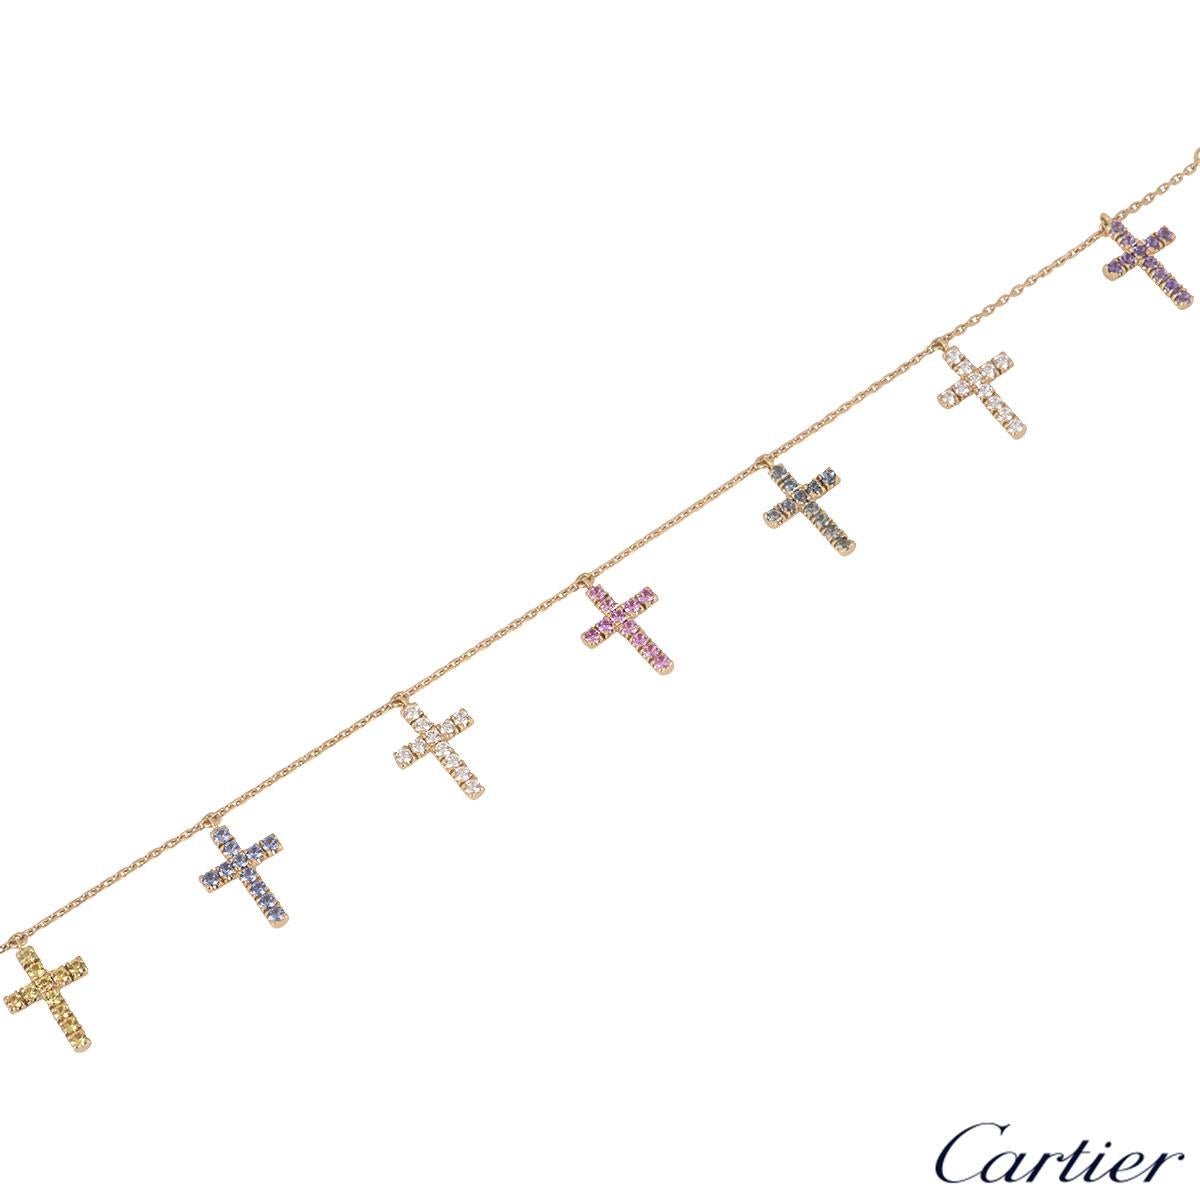 cartier cross bracelet